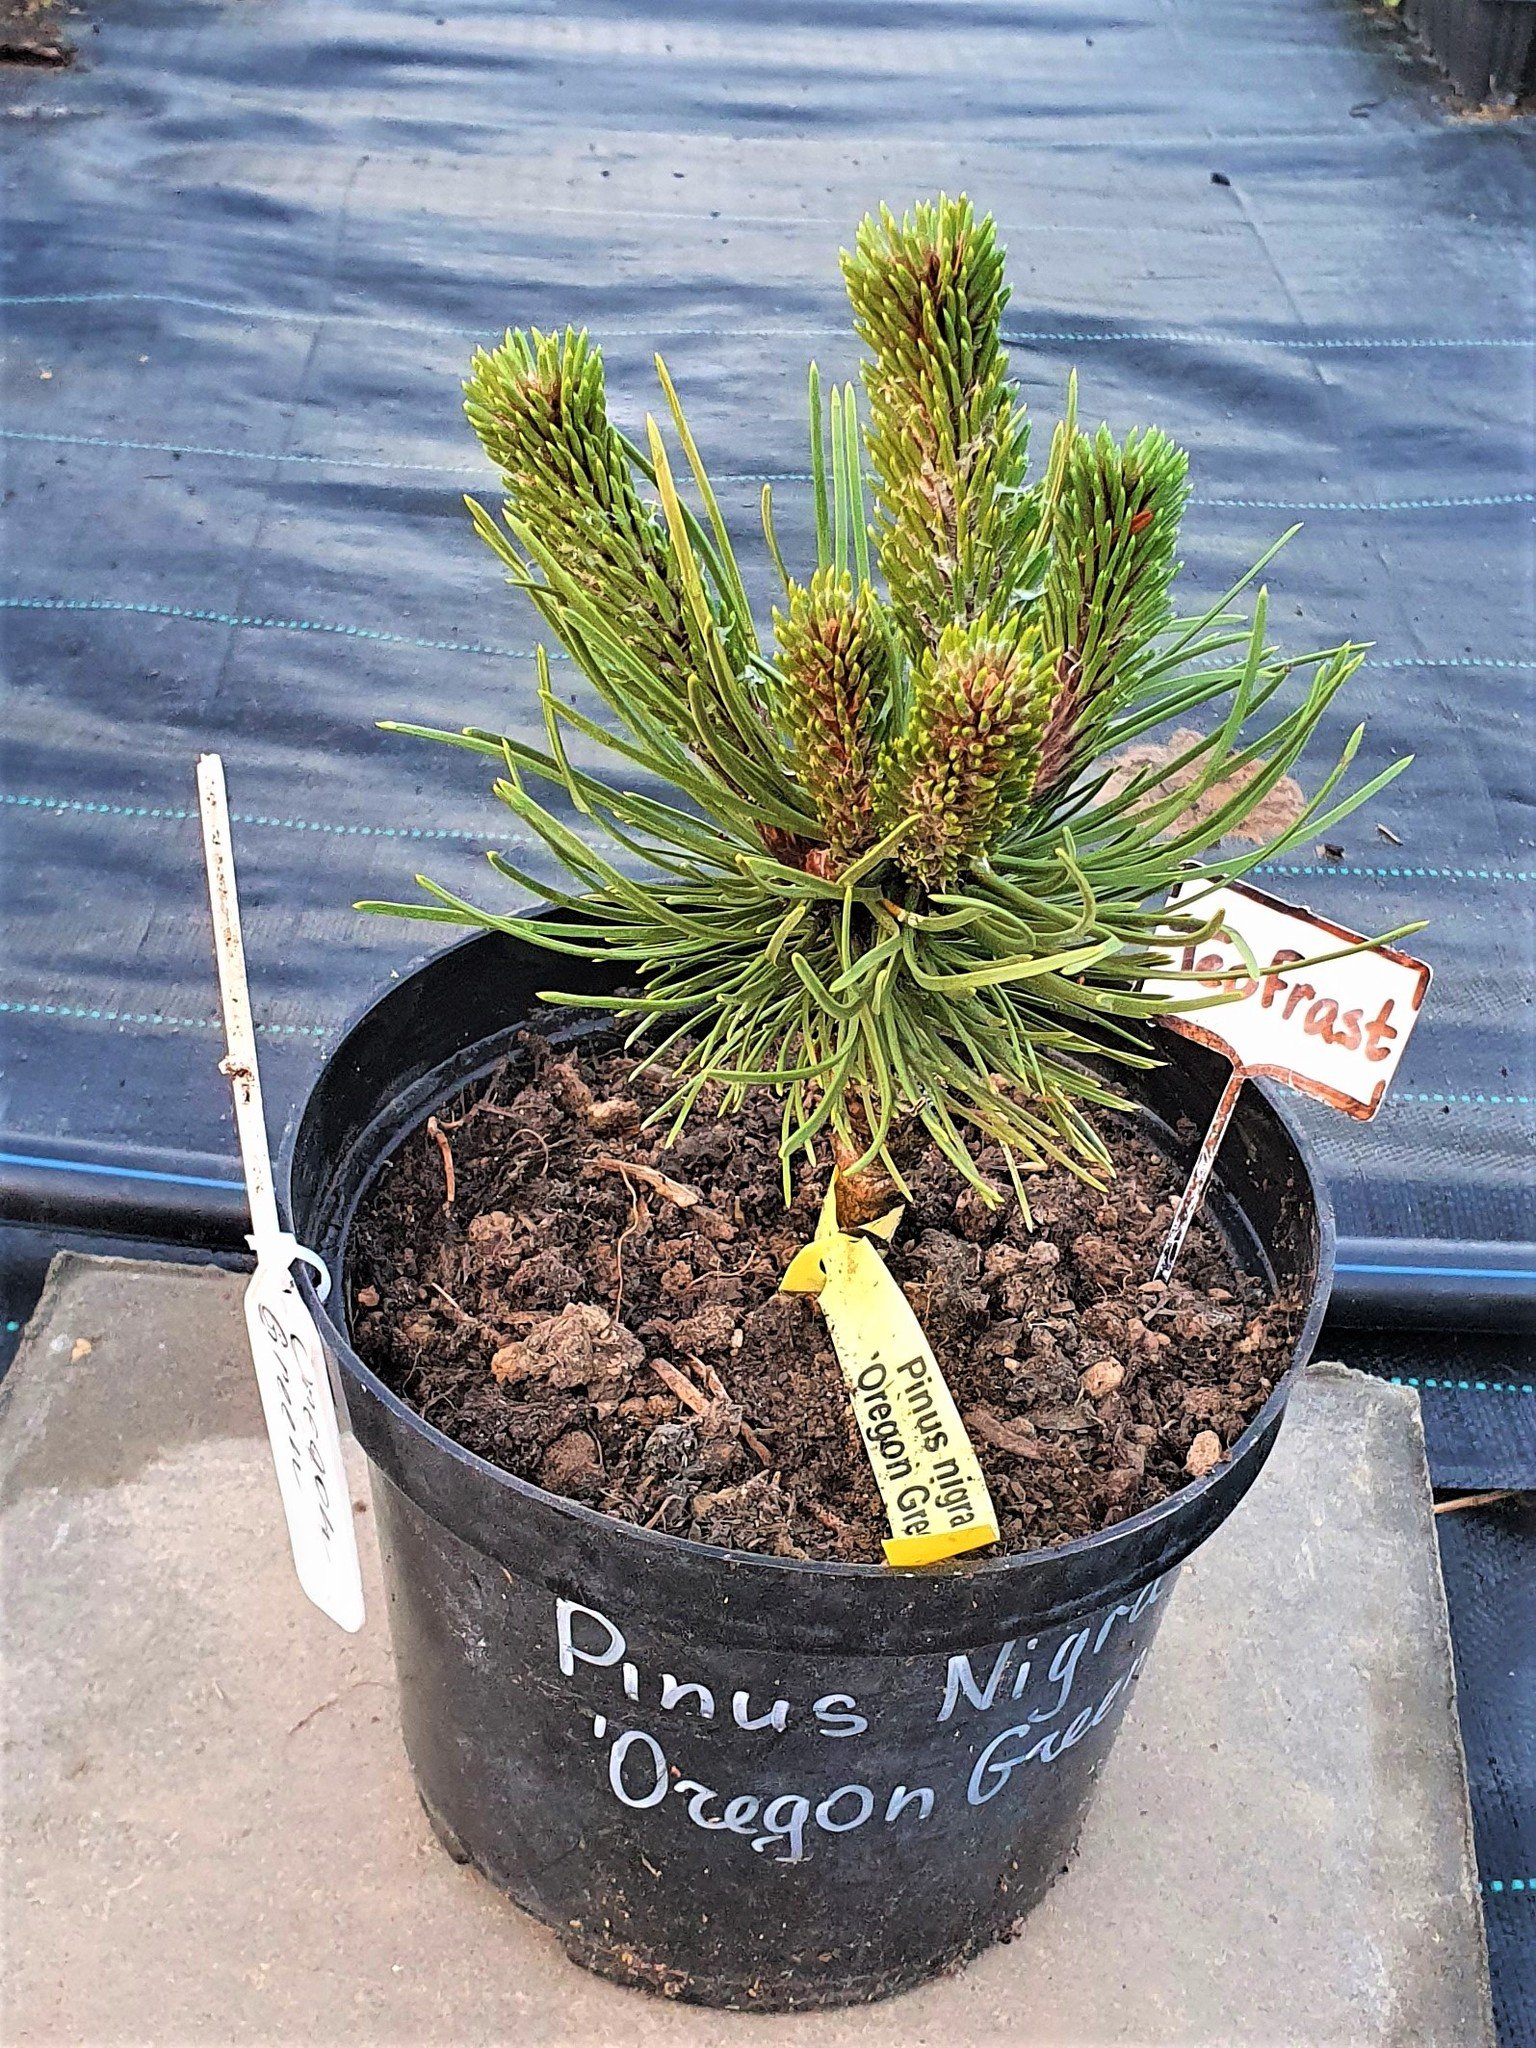 Pinus nigra Oregon Green. Сосна черная Орегон Грин. Pinus nigra Pierrick Bregeon Мультиштамб. Сосна Грин Тауэр.